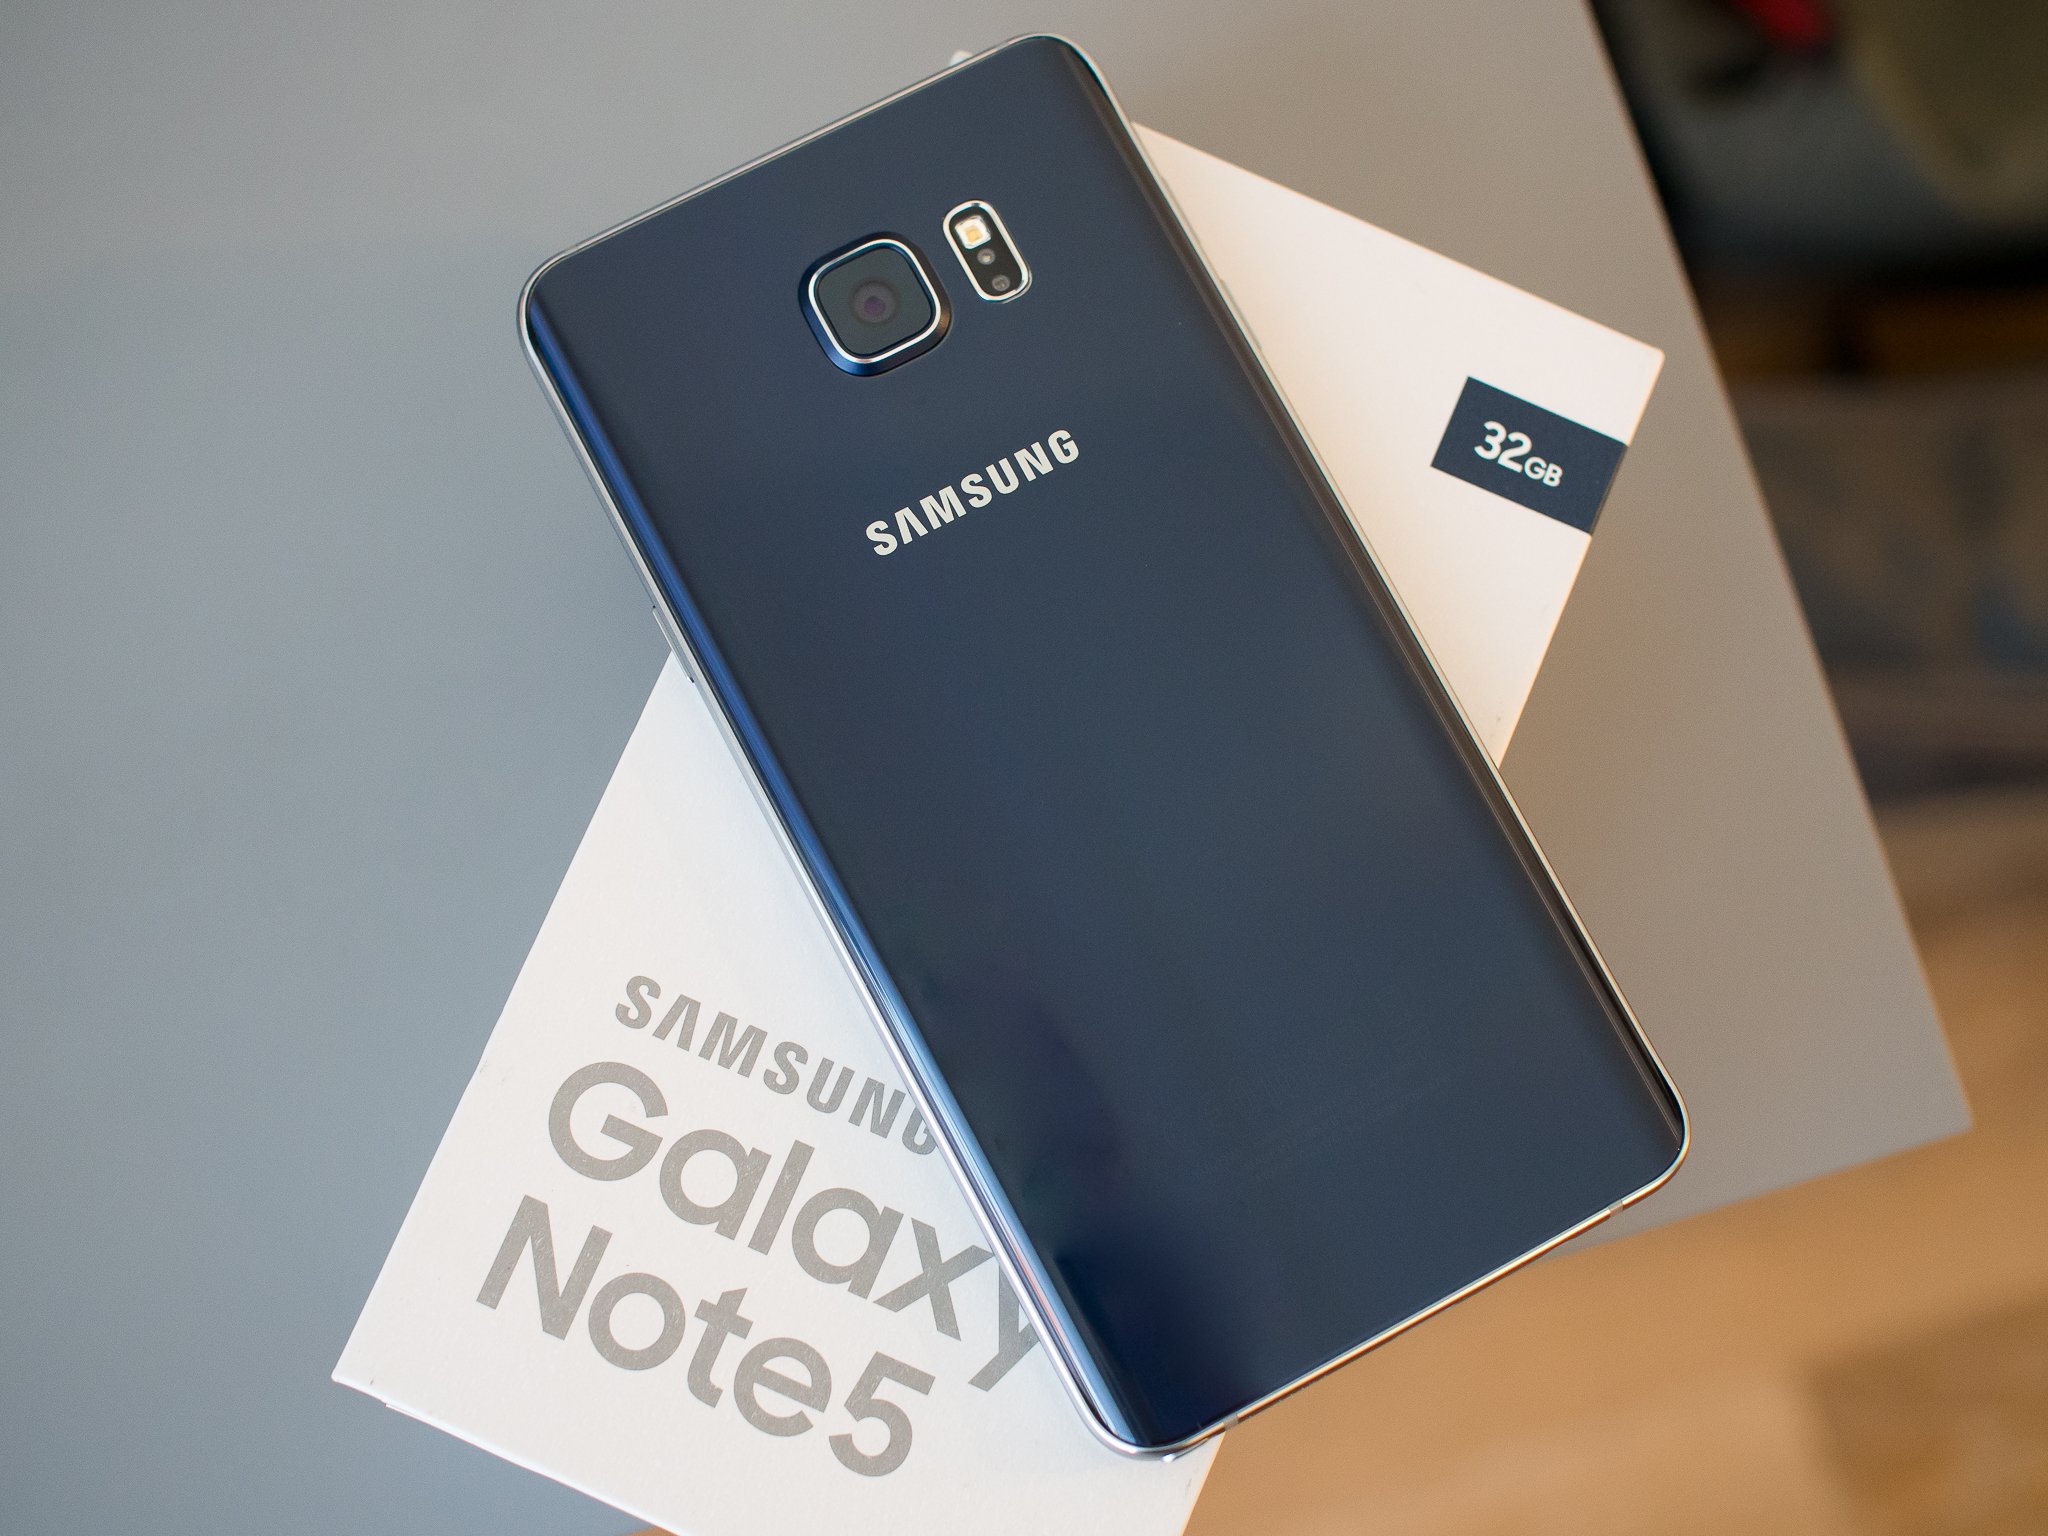 Samsung Galaxy Note 5 and box